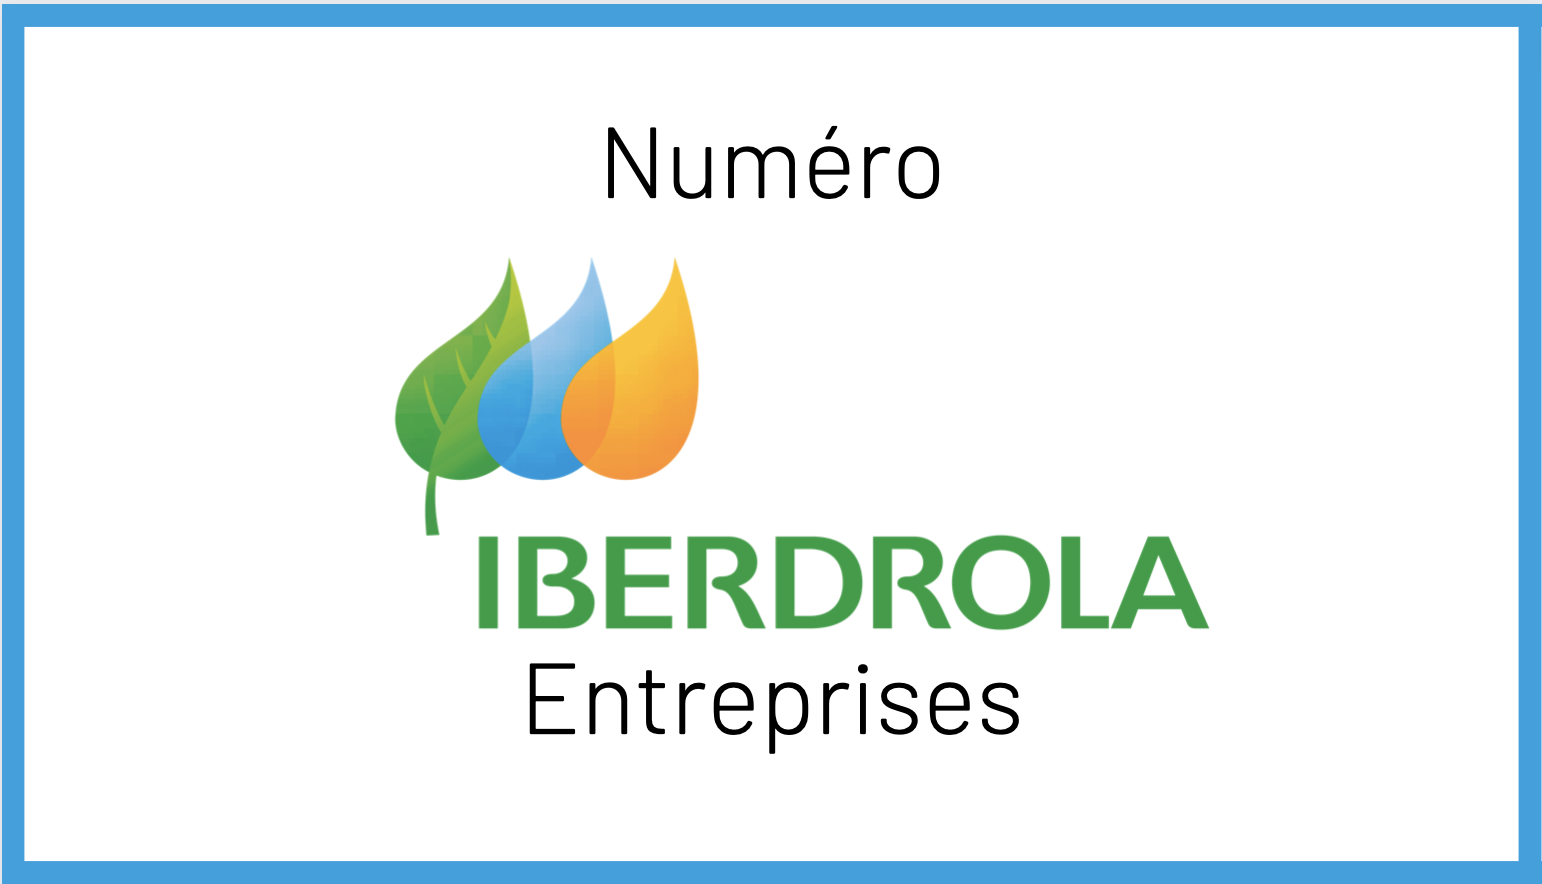 Numéro Iberdrola Pro